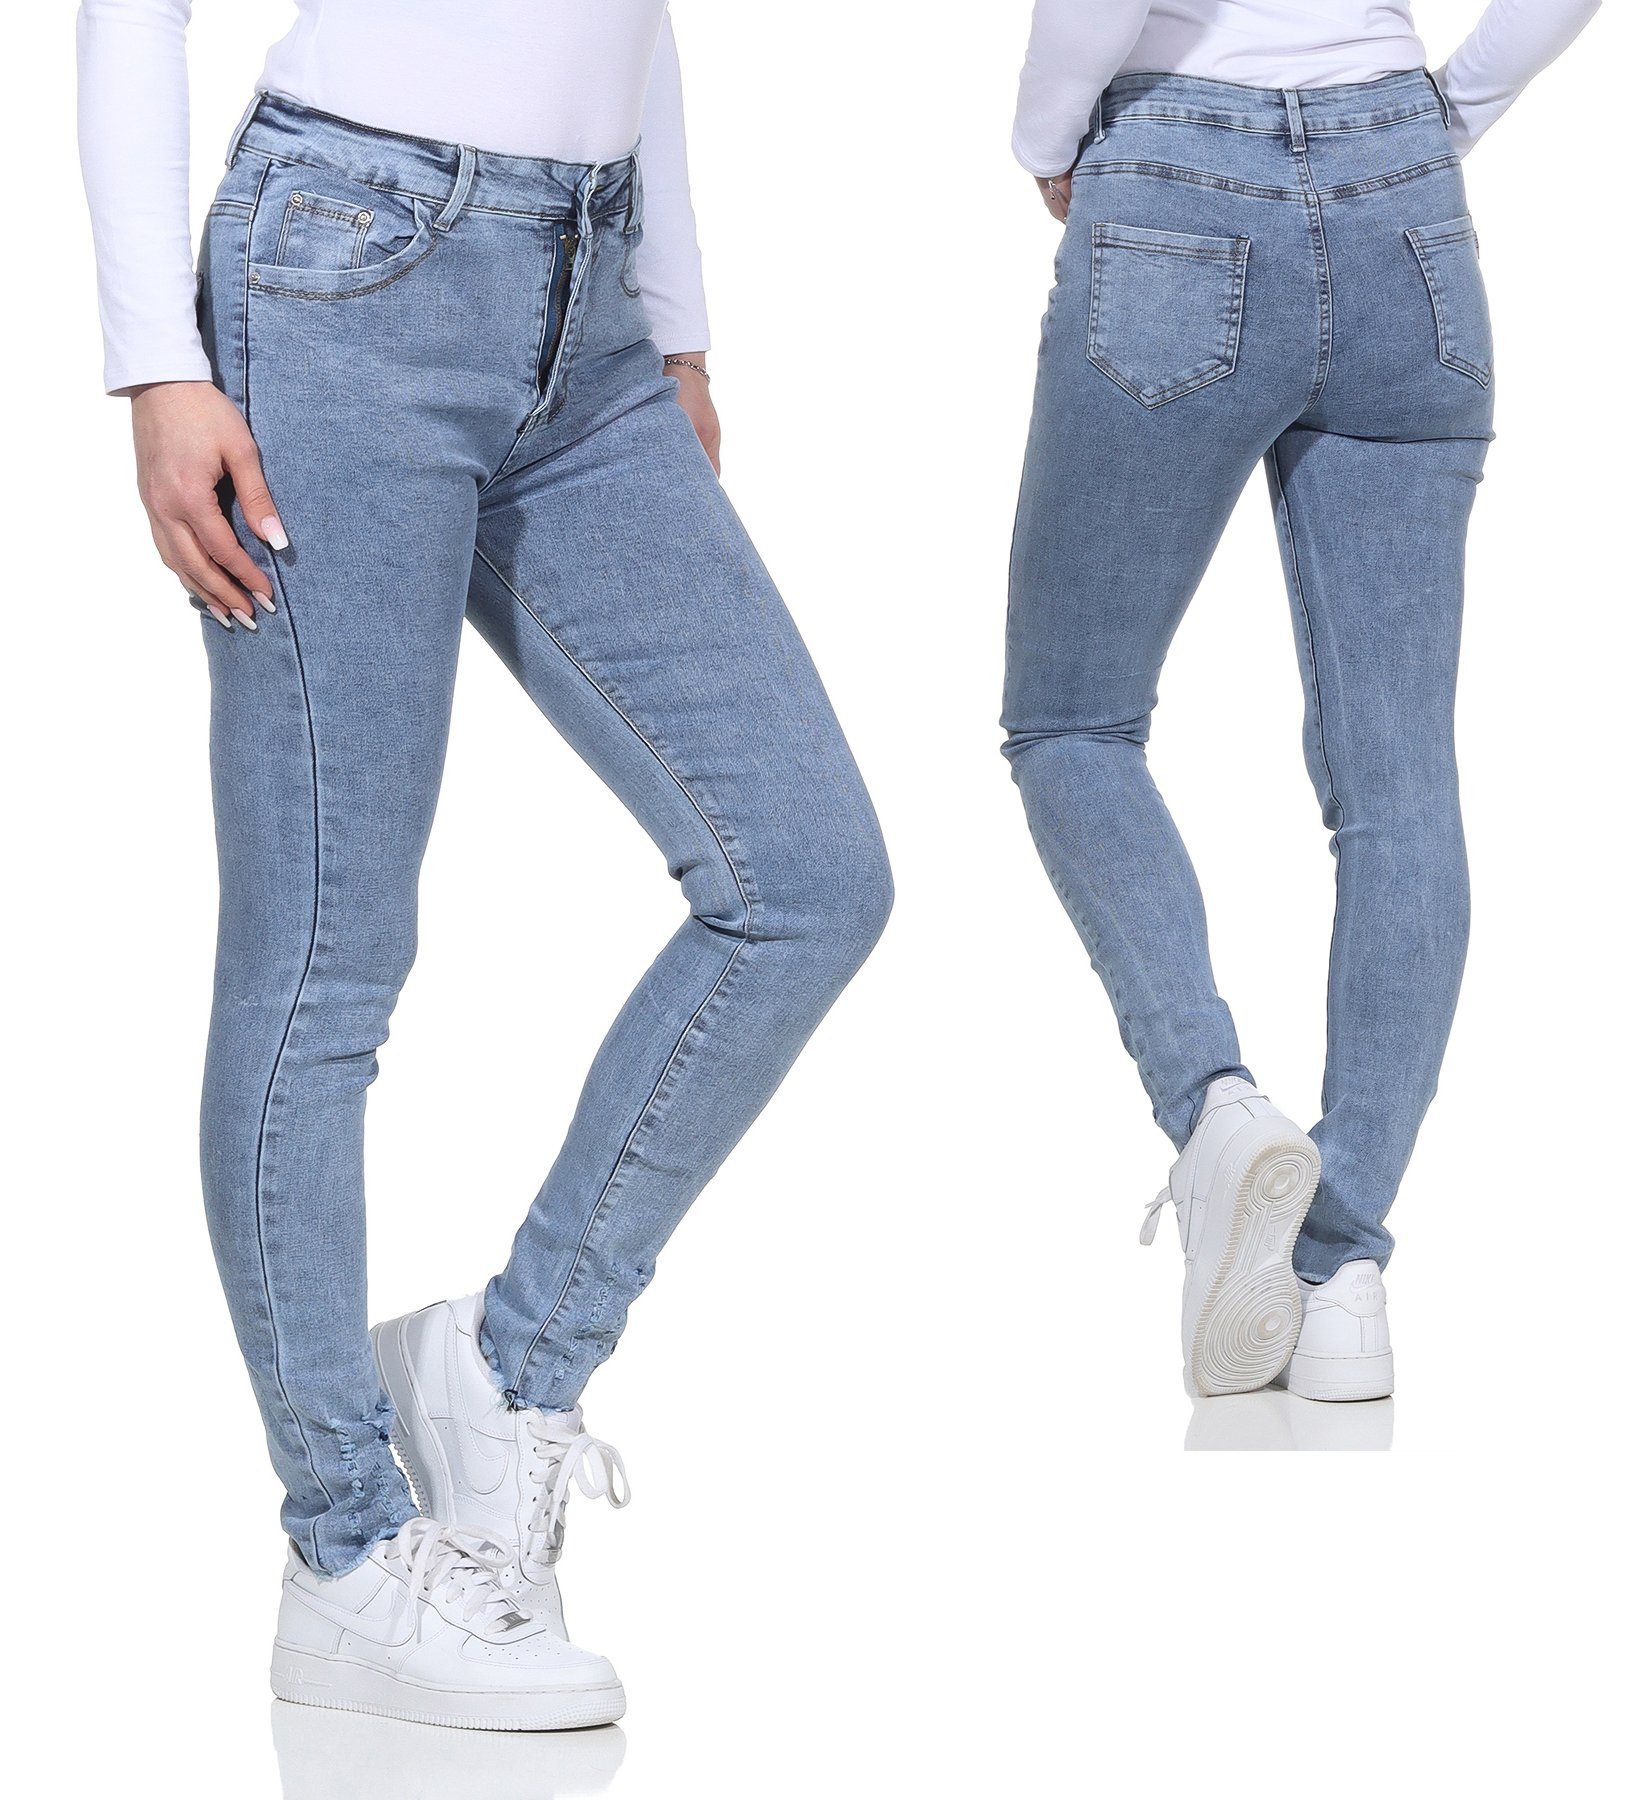 Aurela Damenmode 5-Pocket-Jeans Hellblau Damen Jeanshosen Stretch Look Jeans Distressed moderner Look Destroyed für